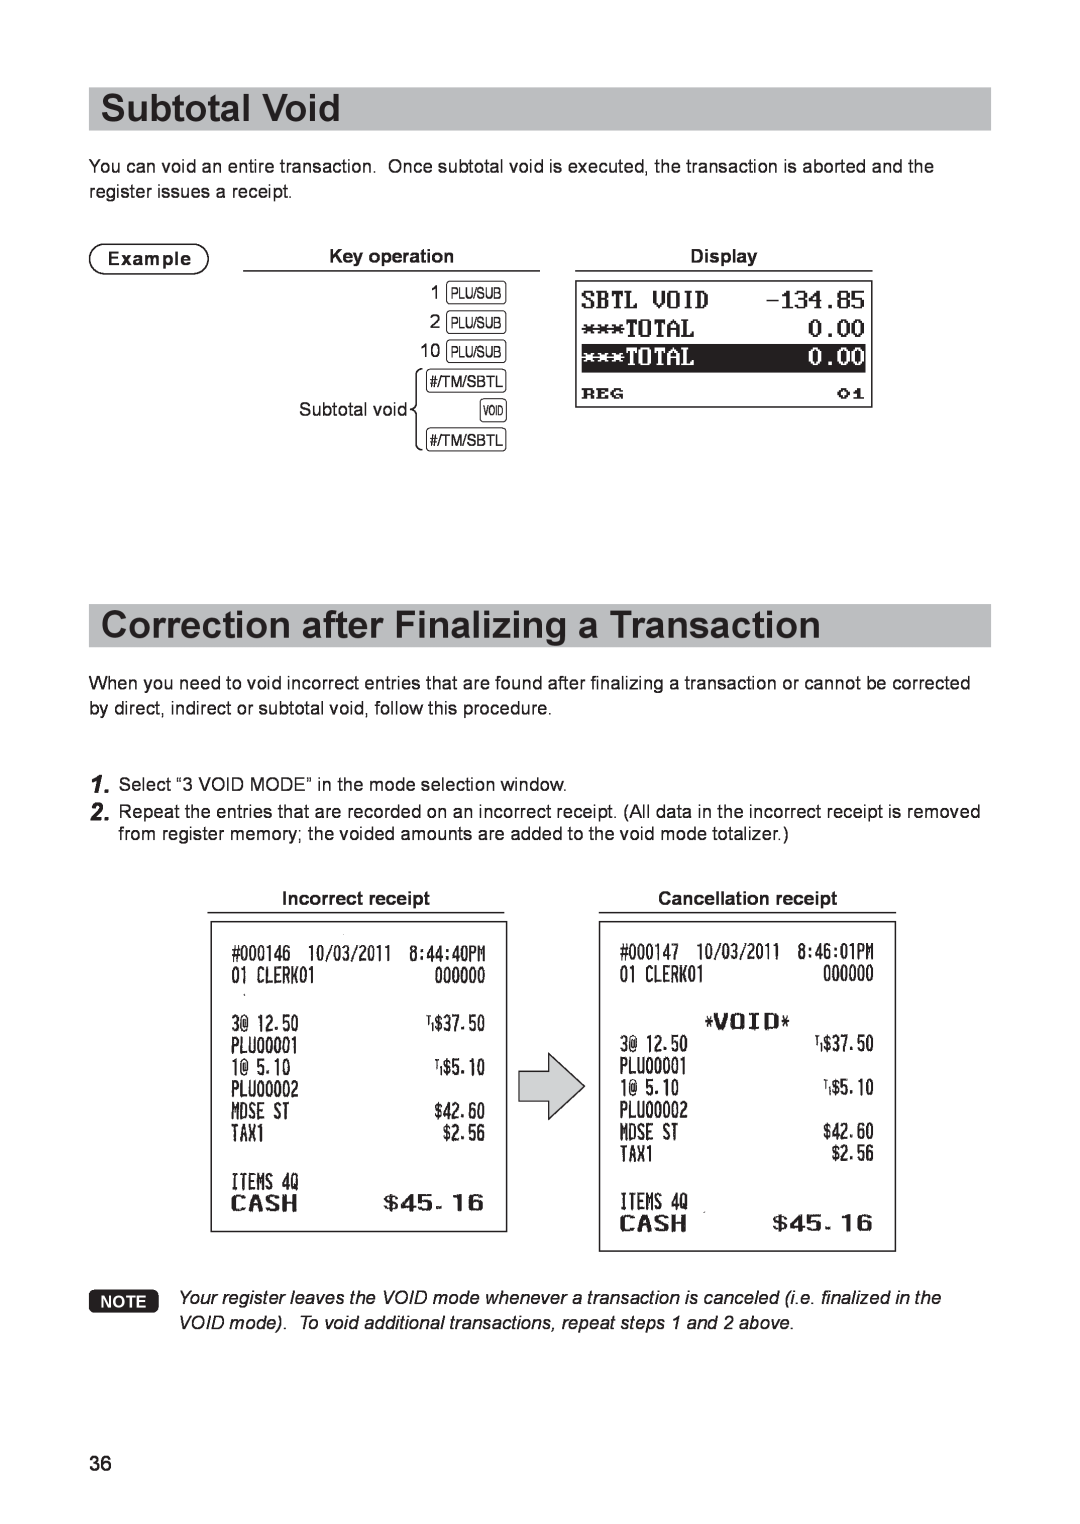 Sharp electonic cash register Subtotal Void, Correction after Finalizing a Transaction, Incorrect receipt, Example 